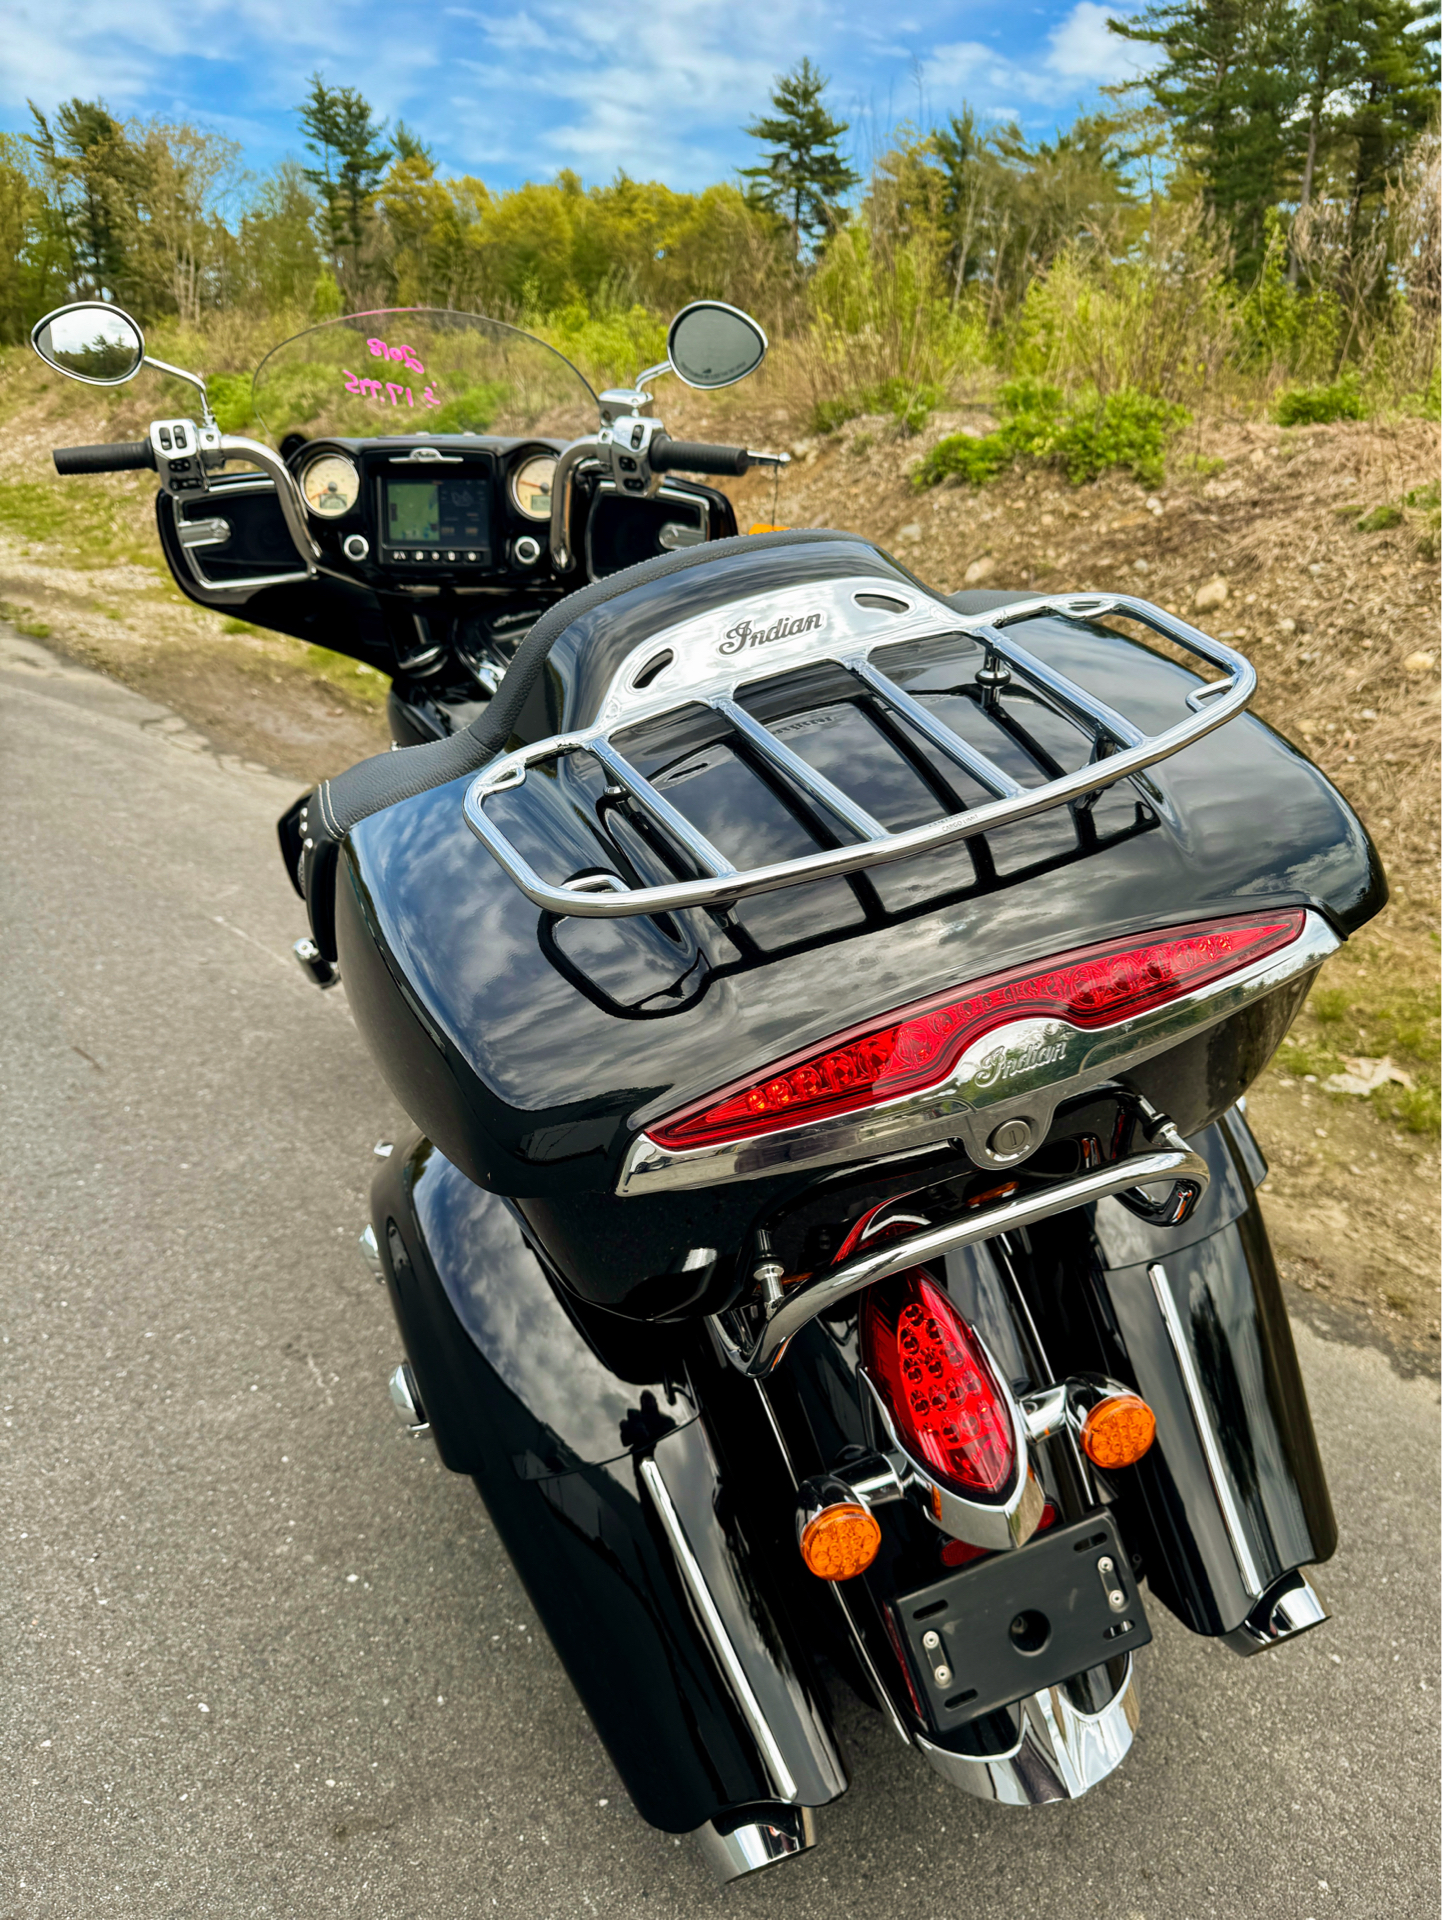 2018 Indian Motorcycle Roadmaster® ABS in Foxboro, Massachusetts - Photo 20